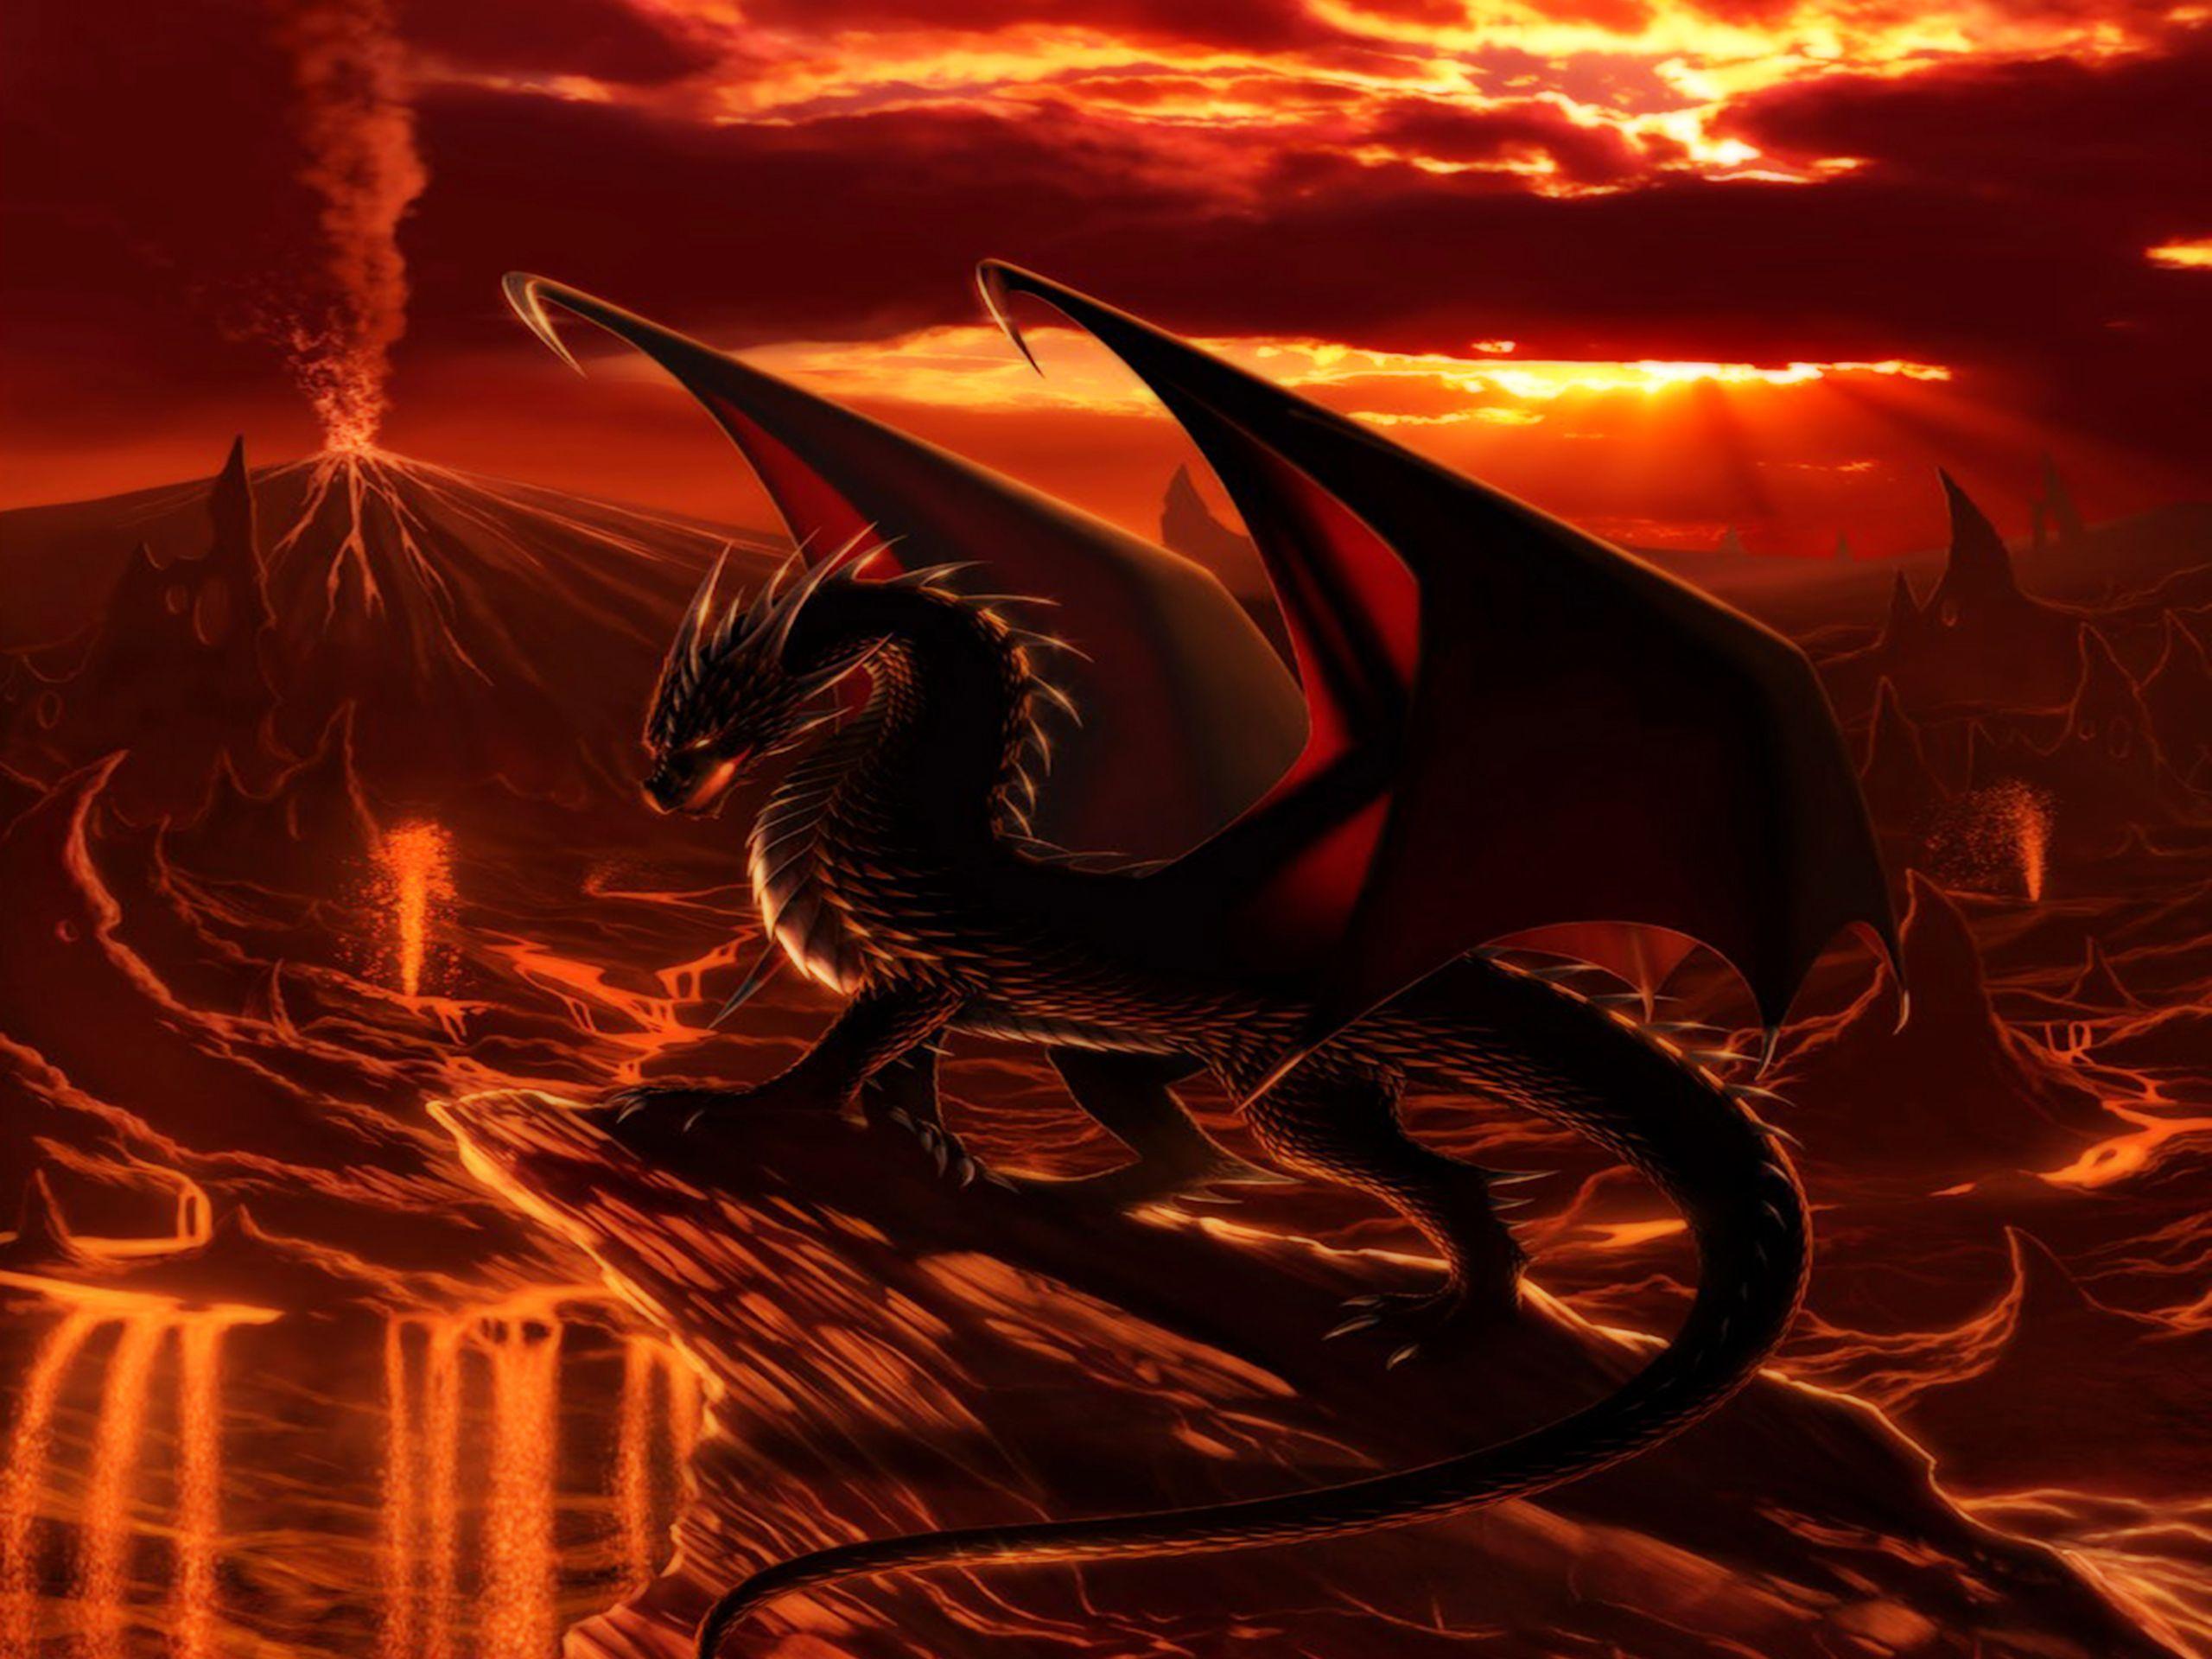 Flame dragon wallpaper by Dragosdomini  Download on ZEDGE  f46c